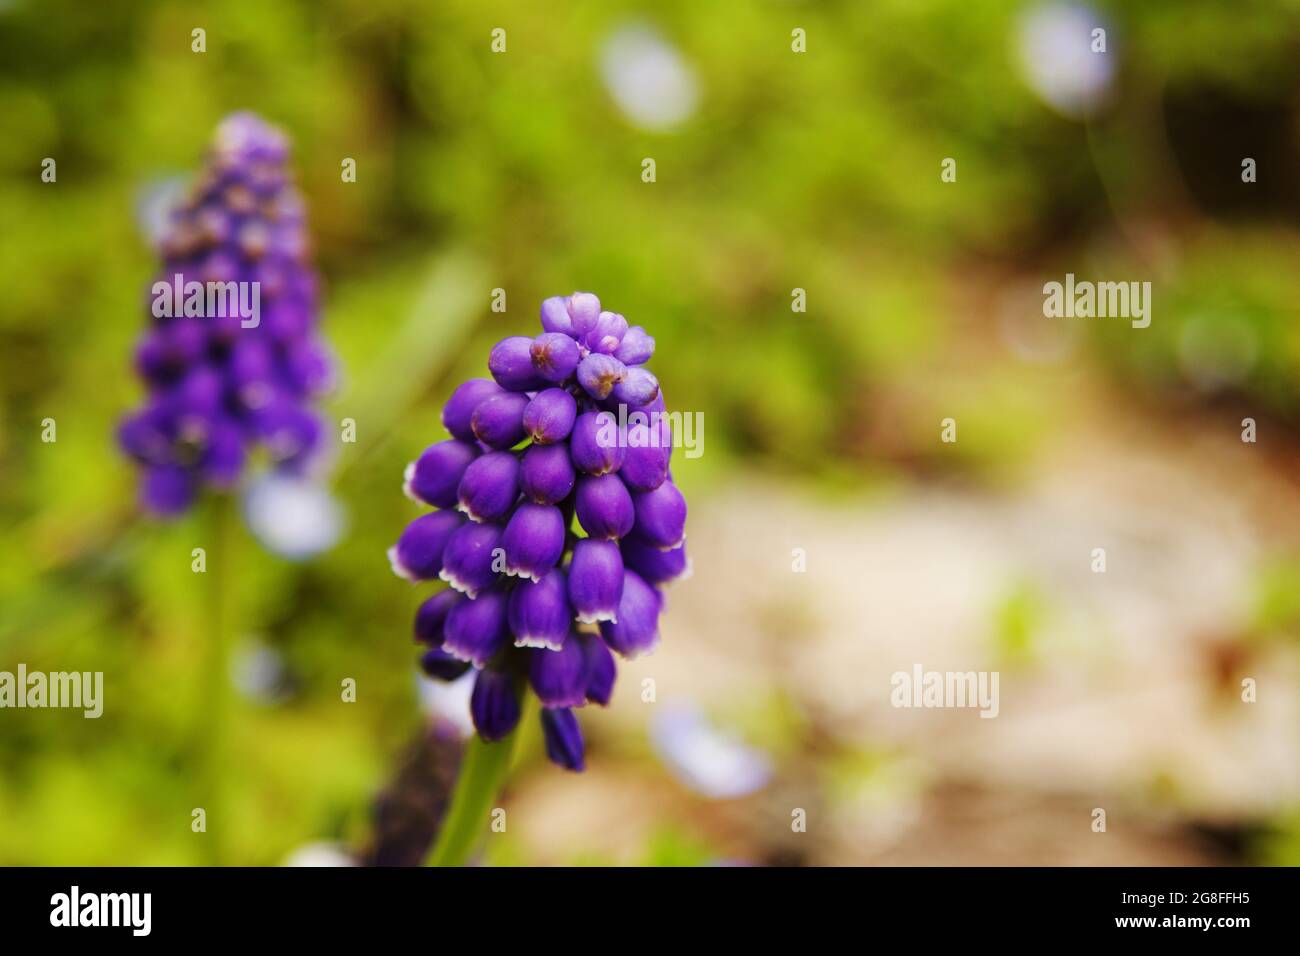 Purple Mascara on natural blurred background Stock Photo